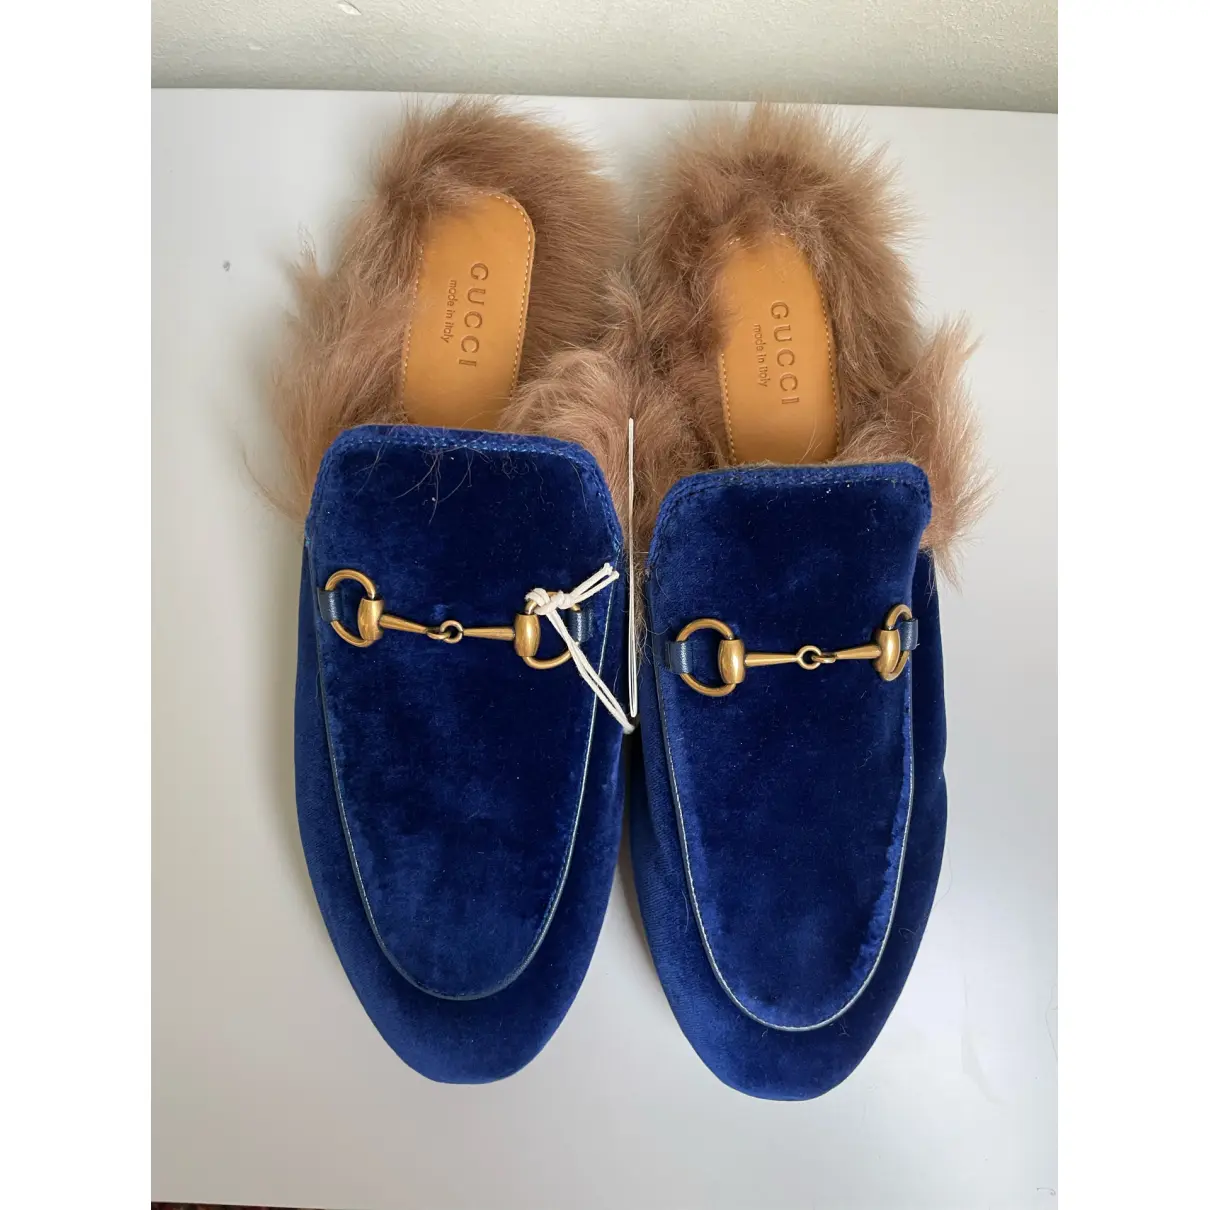 Buy Gucci Princetown velvet sandals online